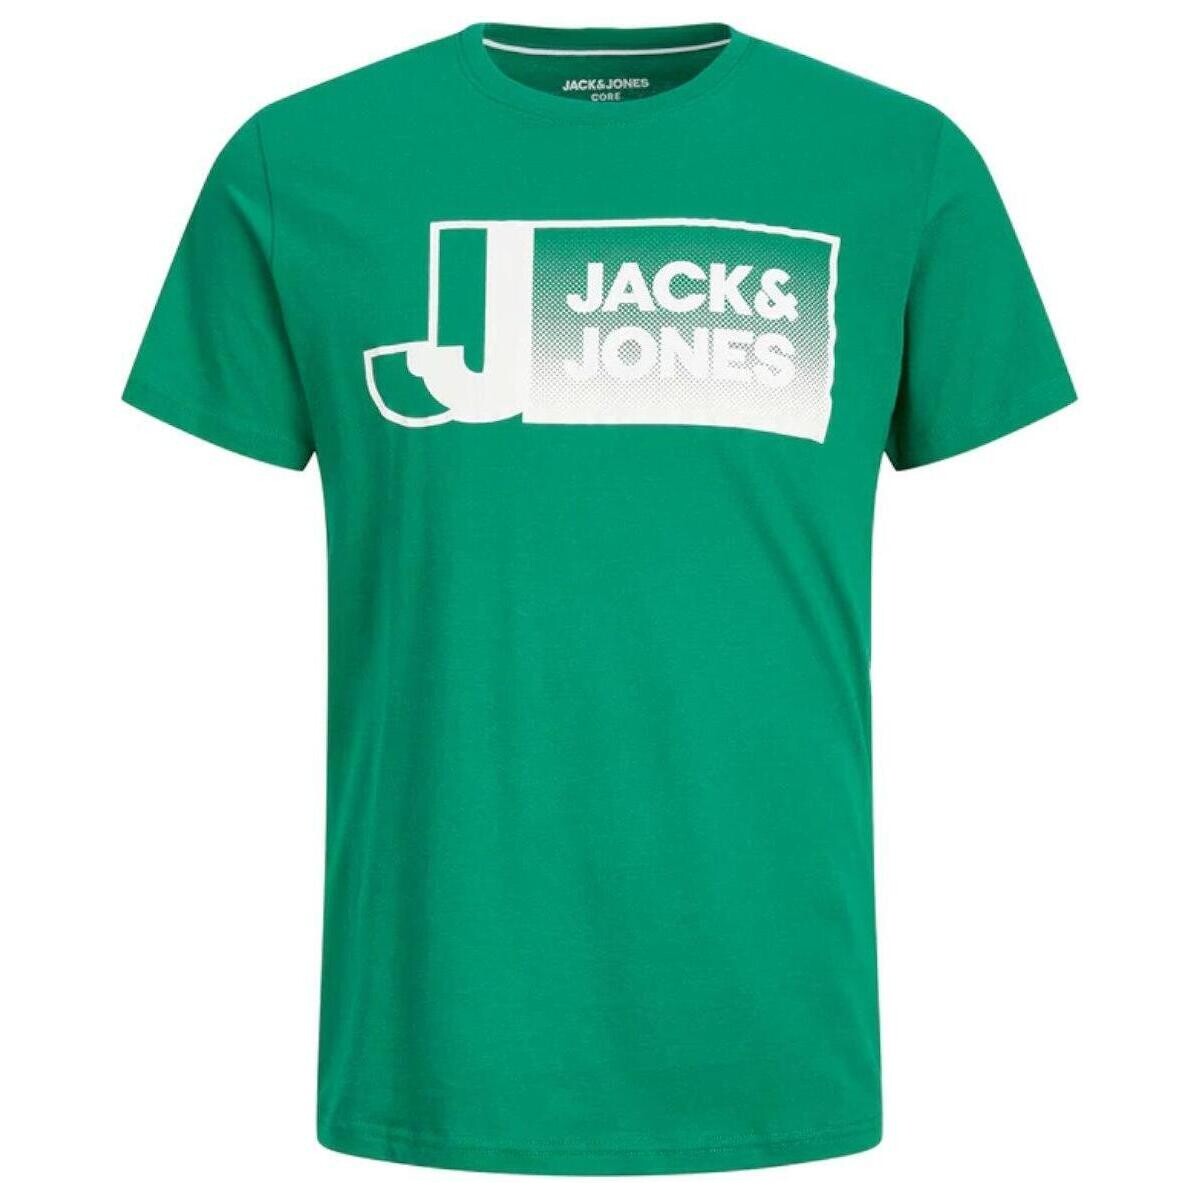 textil Dreng T-shirts m. korte ærmer Jack & Jones  Grøn